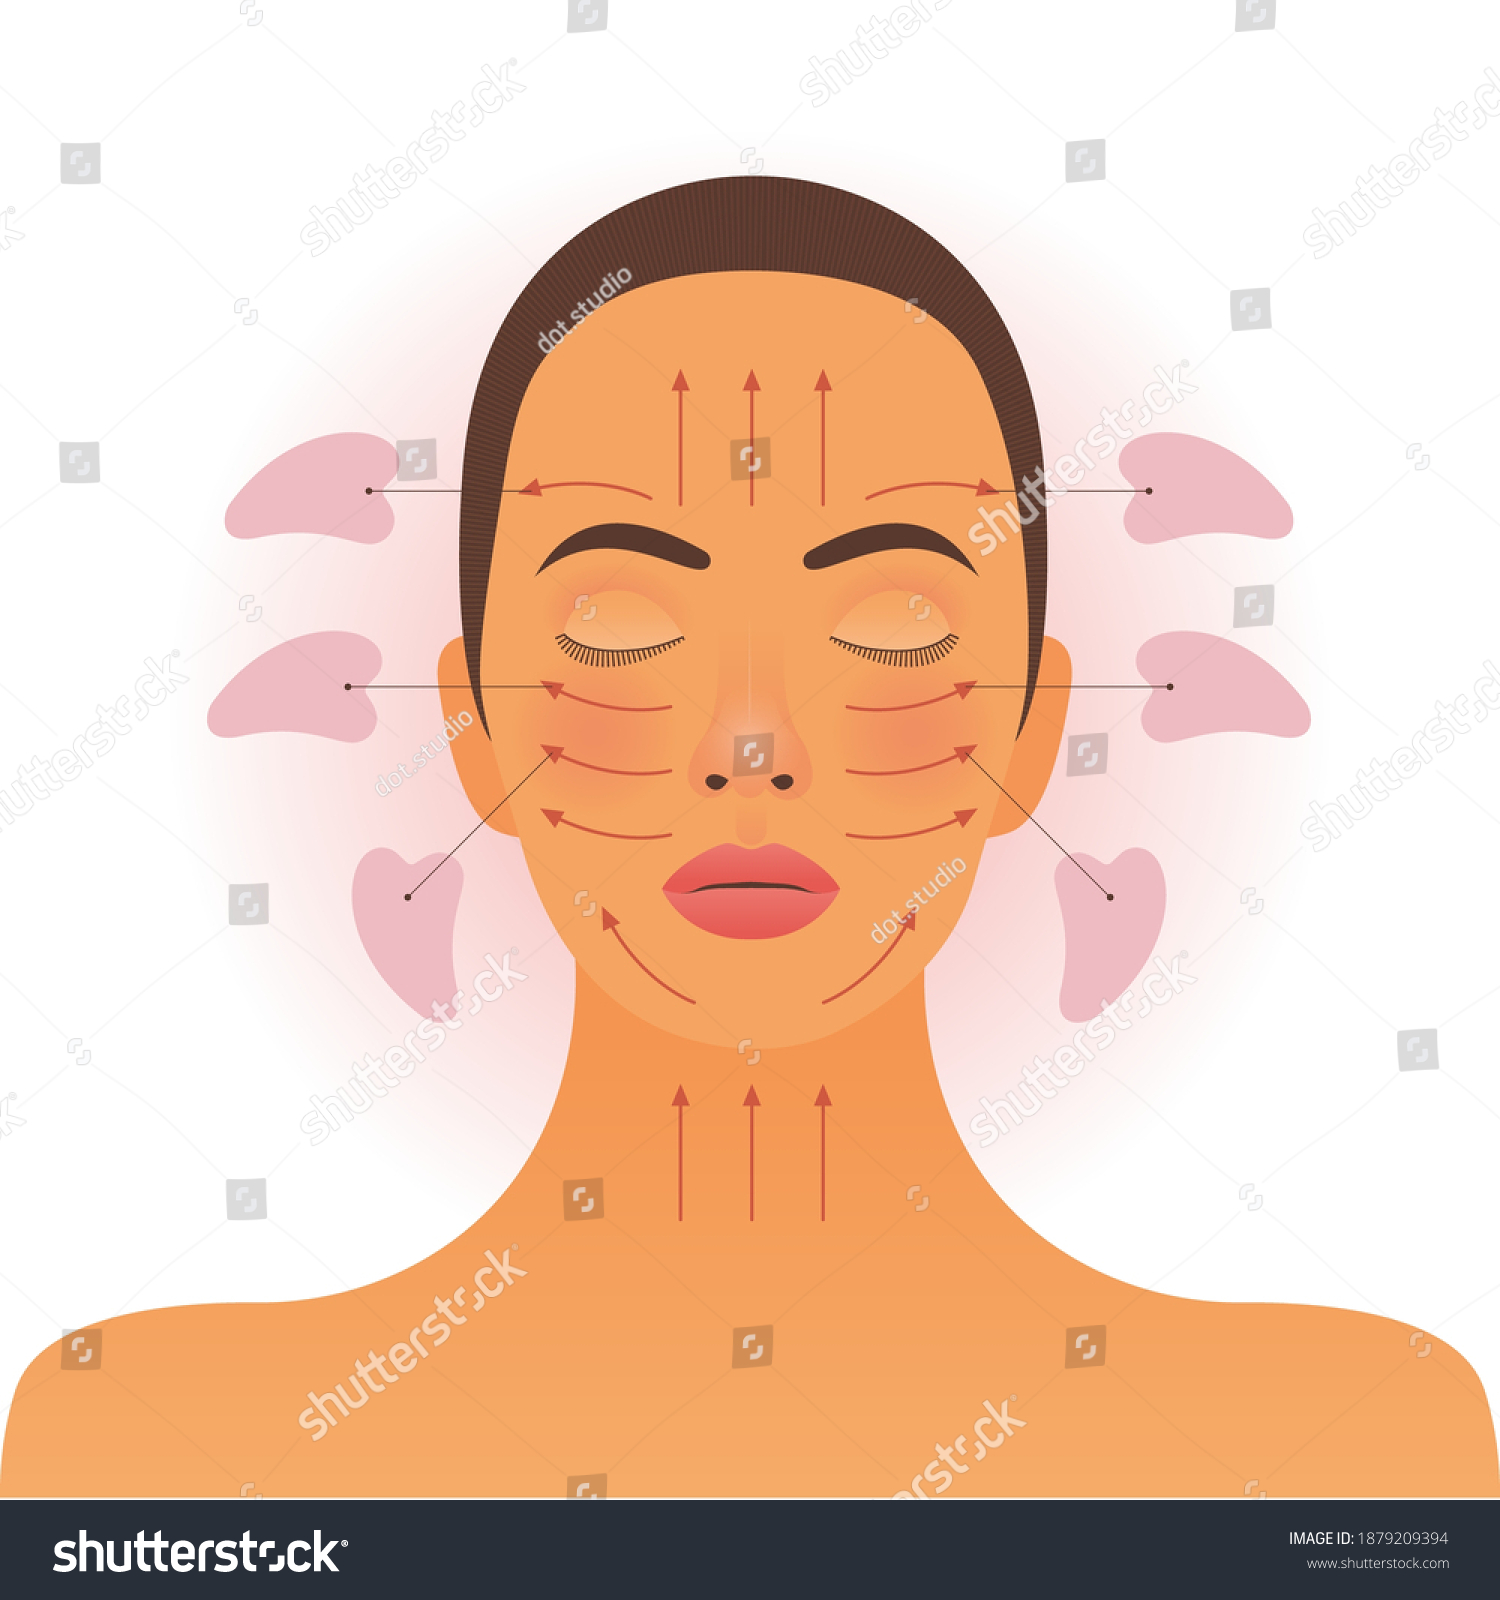 Gua Sha Facial Massage Treatment Modern Stock Vector Royalty Free 1879209394 Shutterstock 